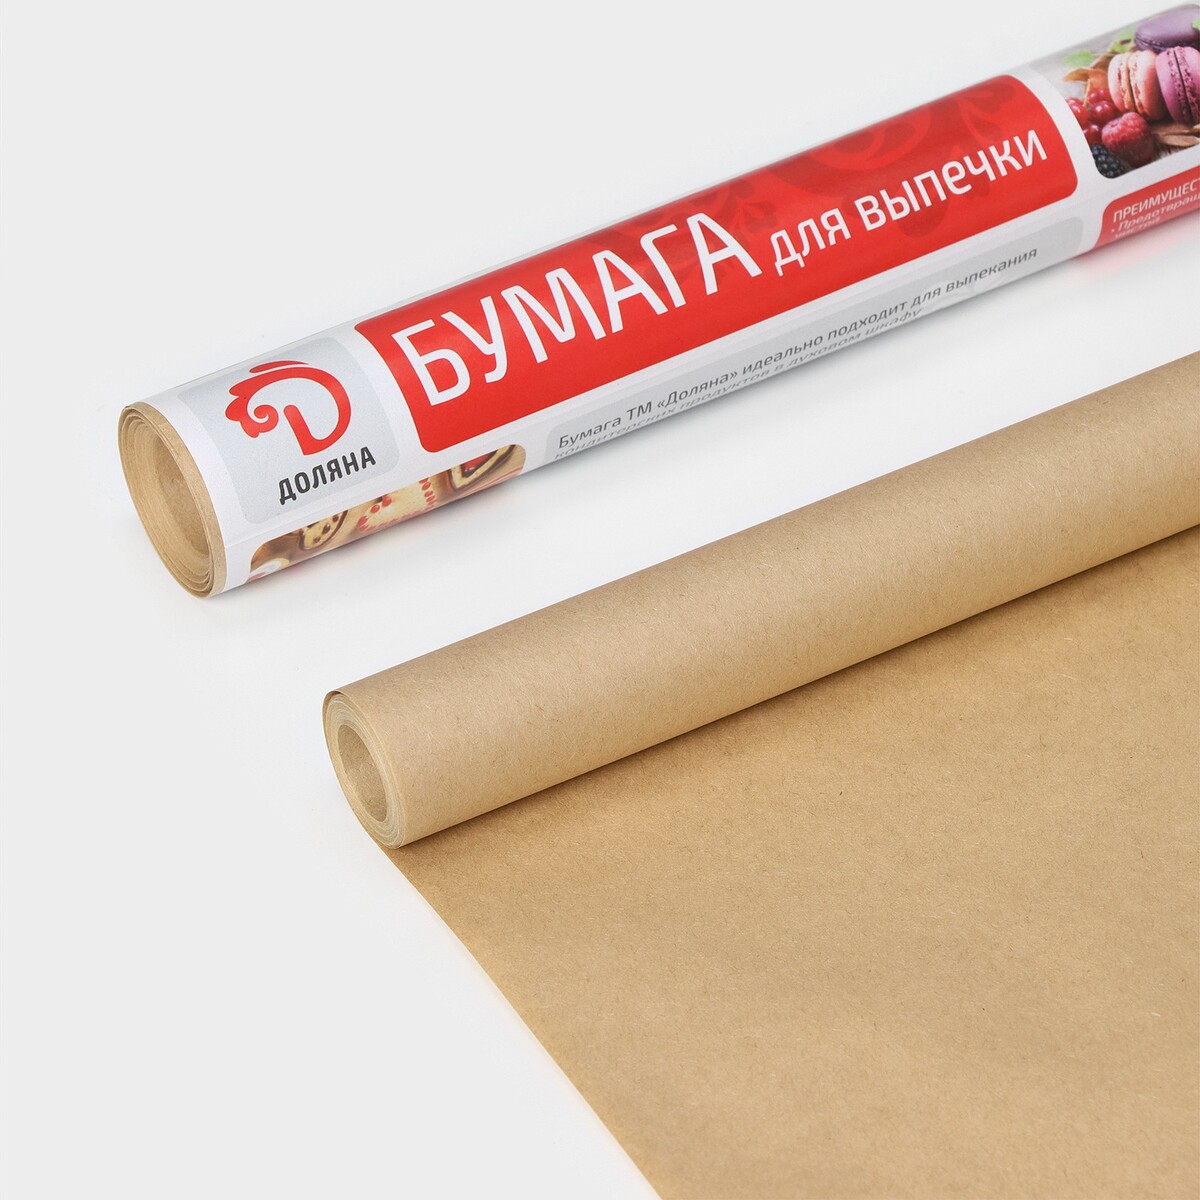 Бумага для выпечки доляна, 30 см×10 м, в термоусадке paclan бумага для выпечки с ножом 500х38 см